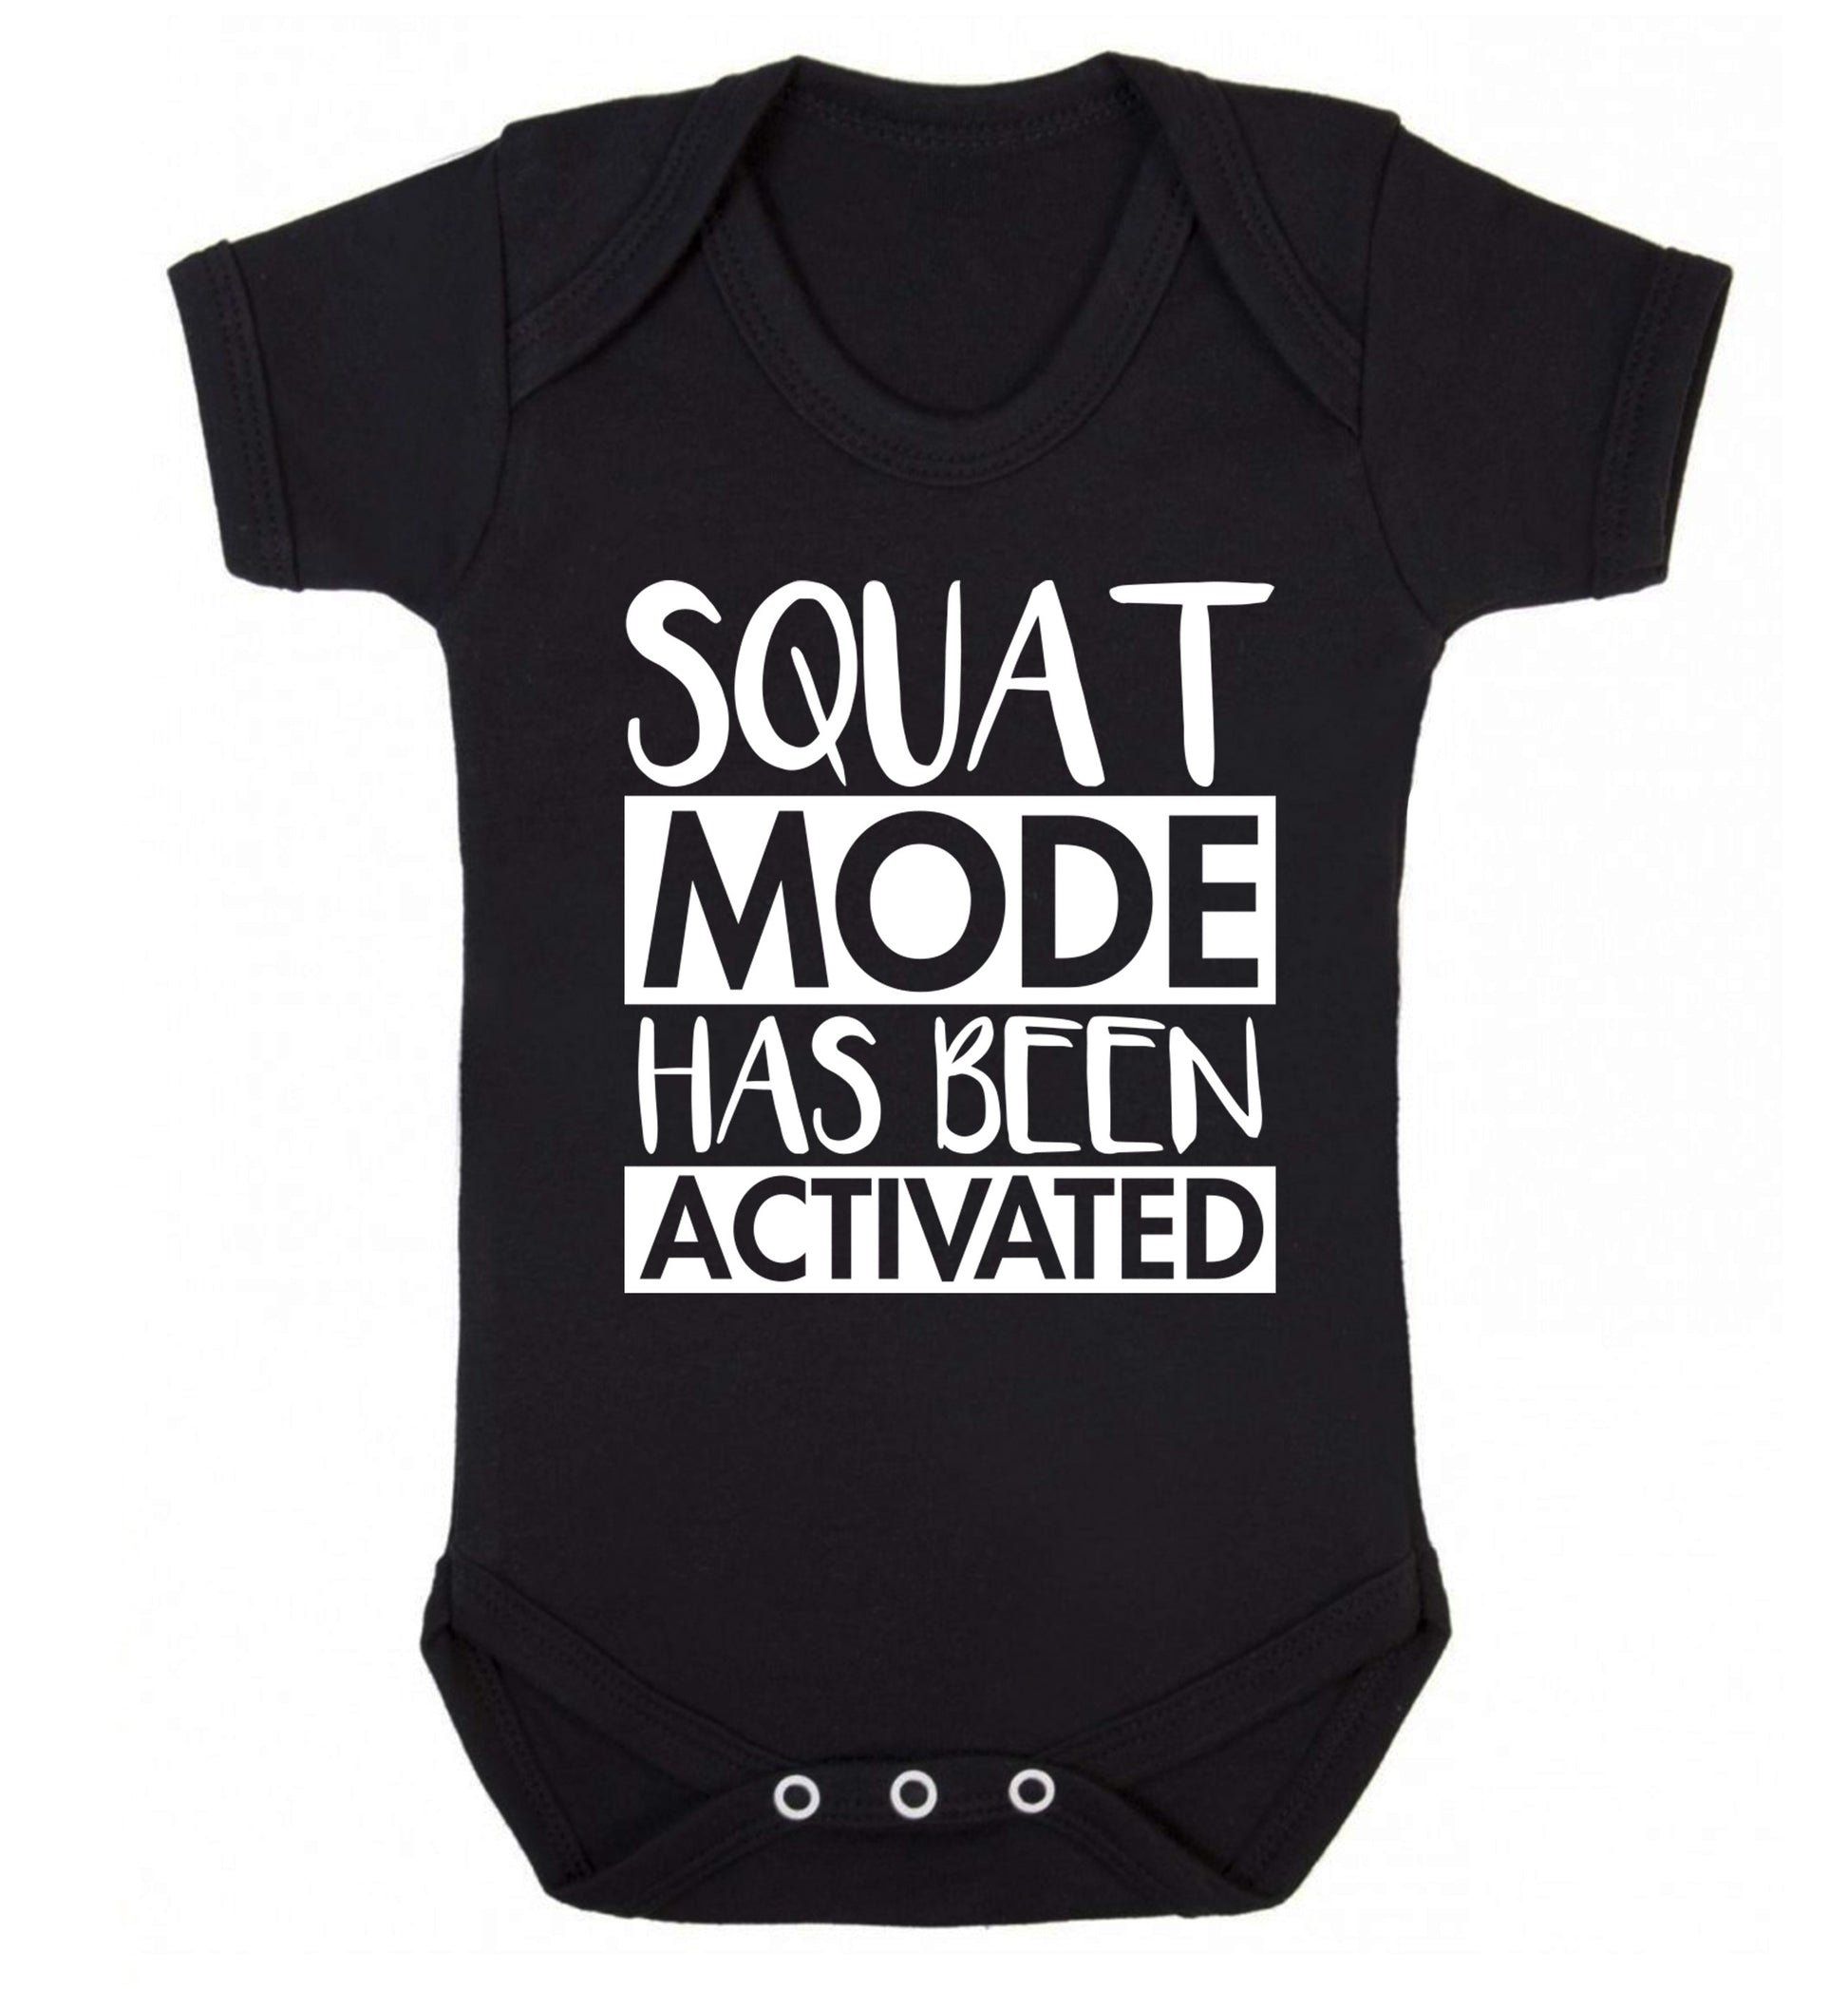 Squat mode activated Baby Vest black 18-24 months